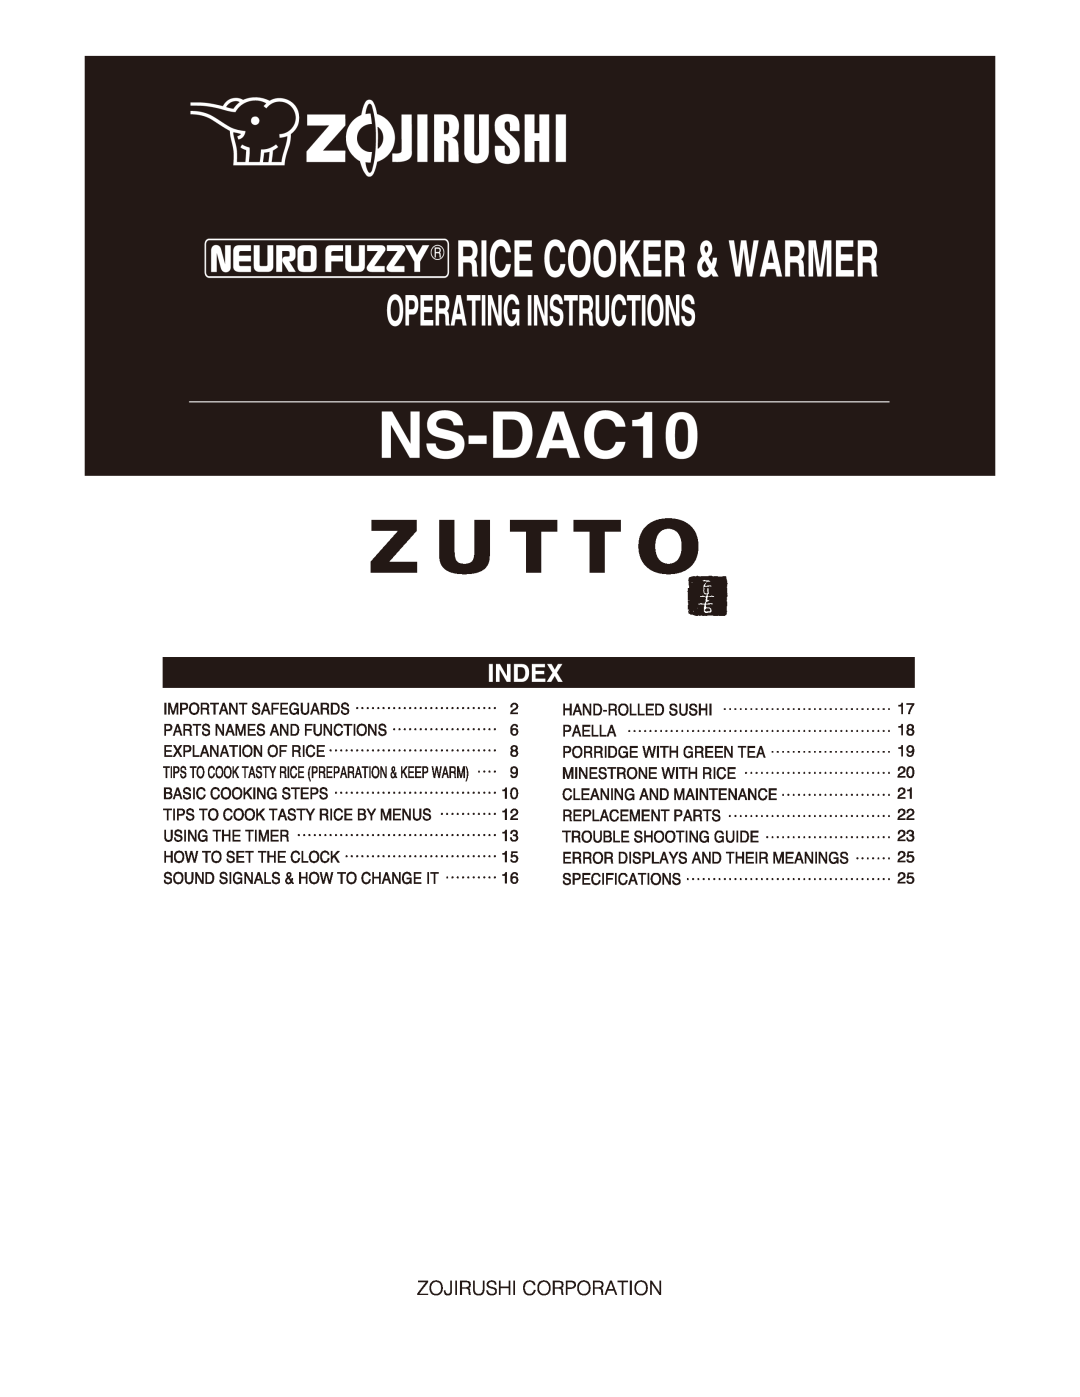 Zojirushi NS-DAC10 manual 